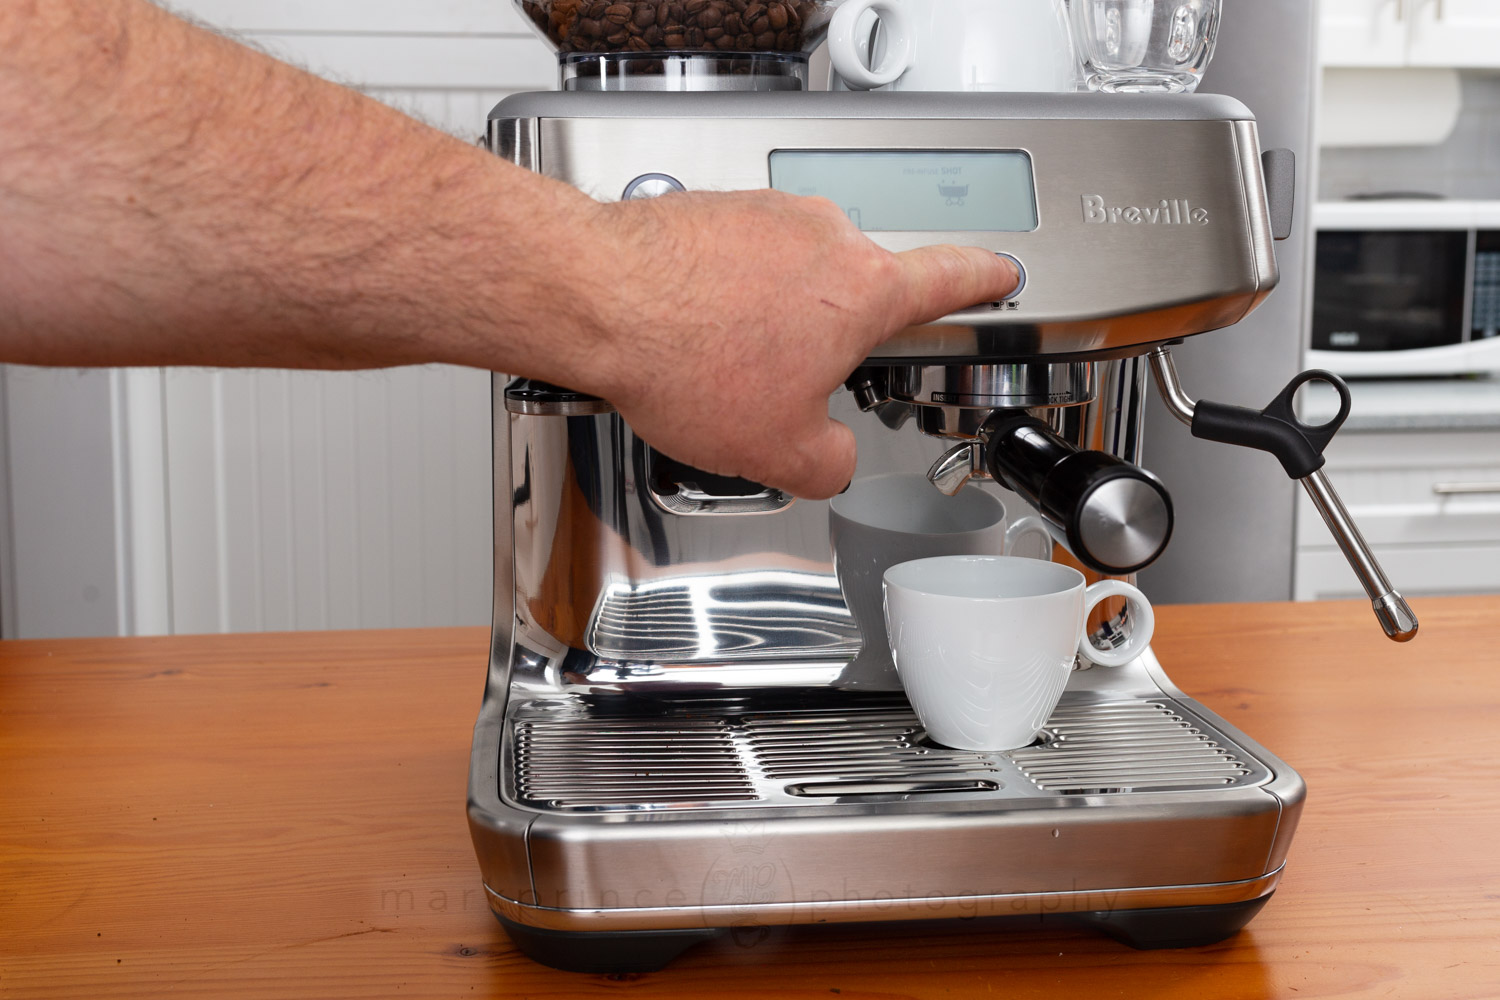 How to Make an Americano » CoffeeGeek